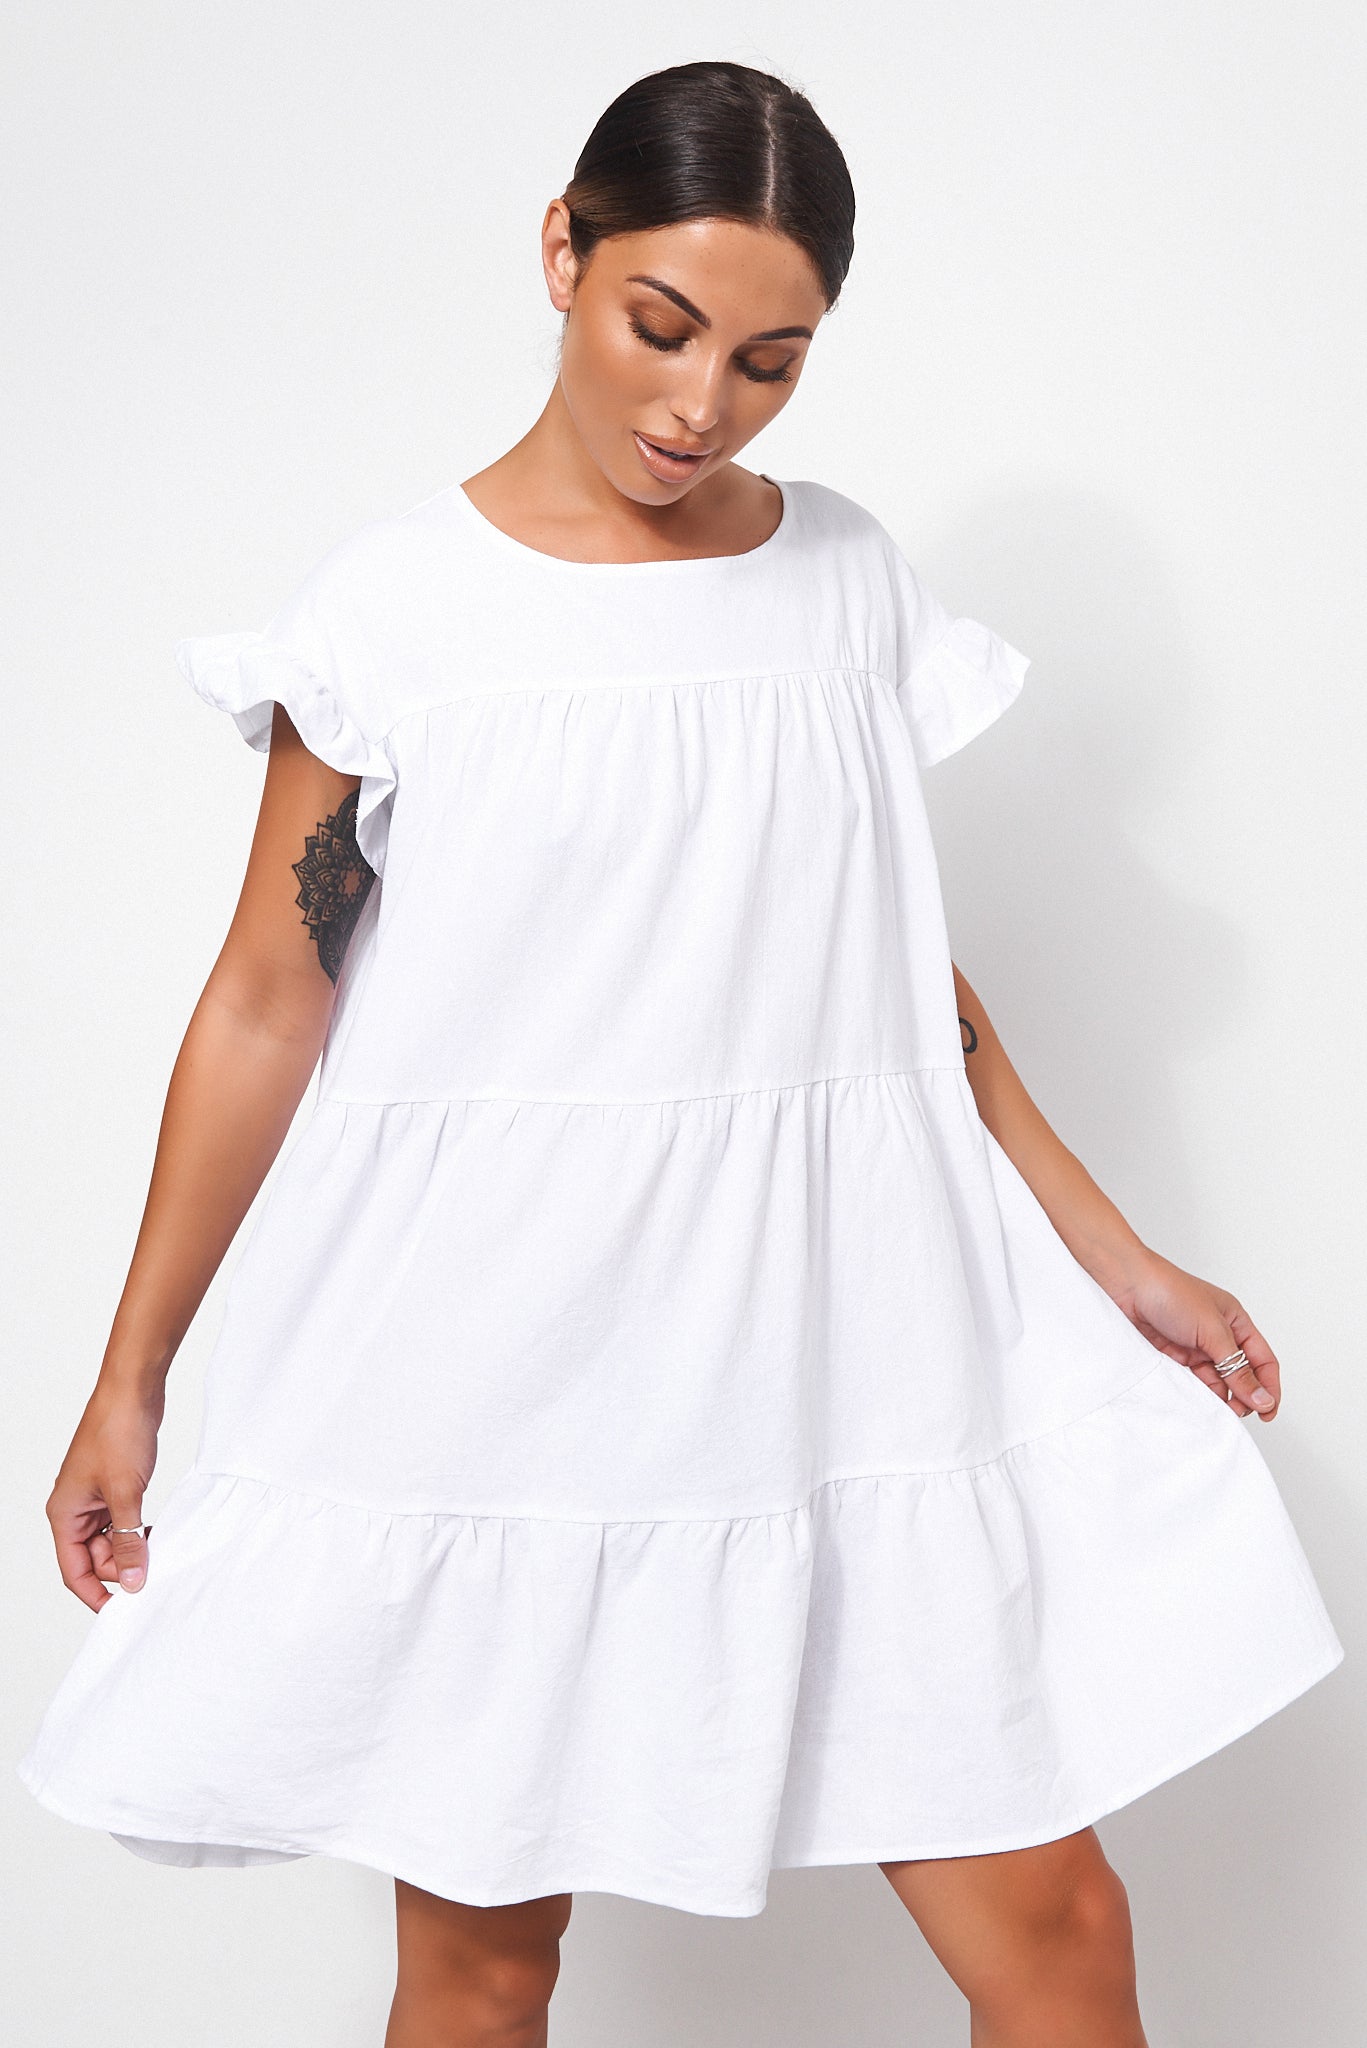 Monet White Frill Smock Dress – The Fashion Bible